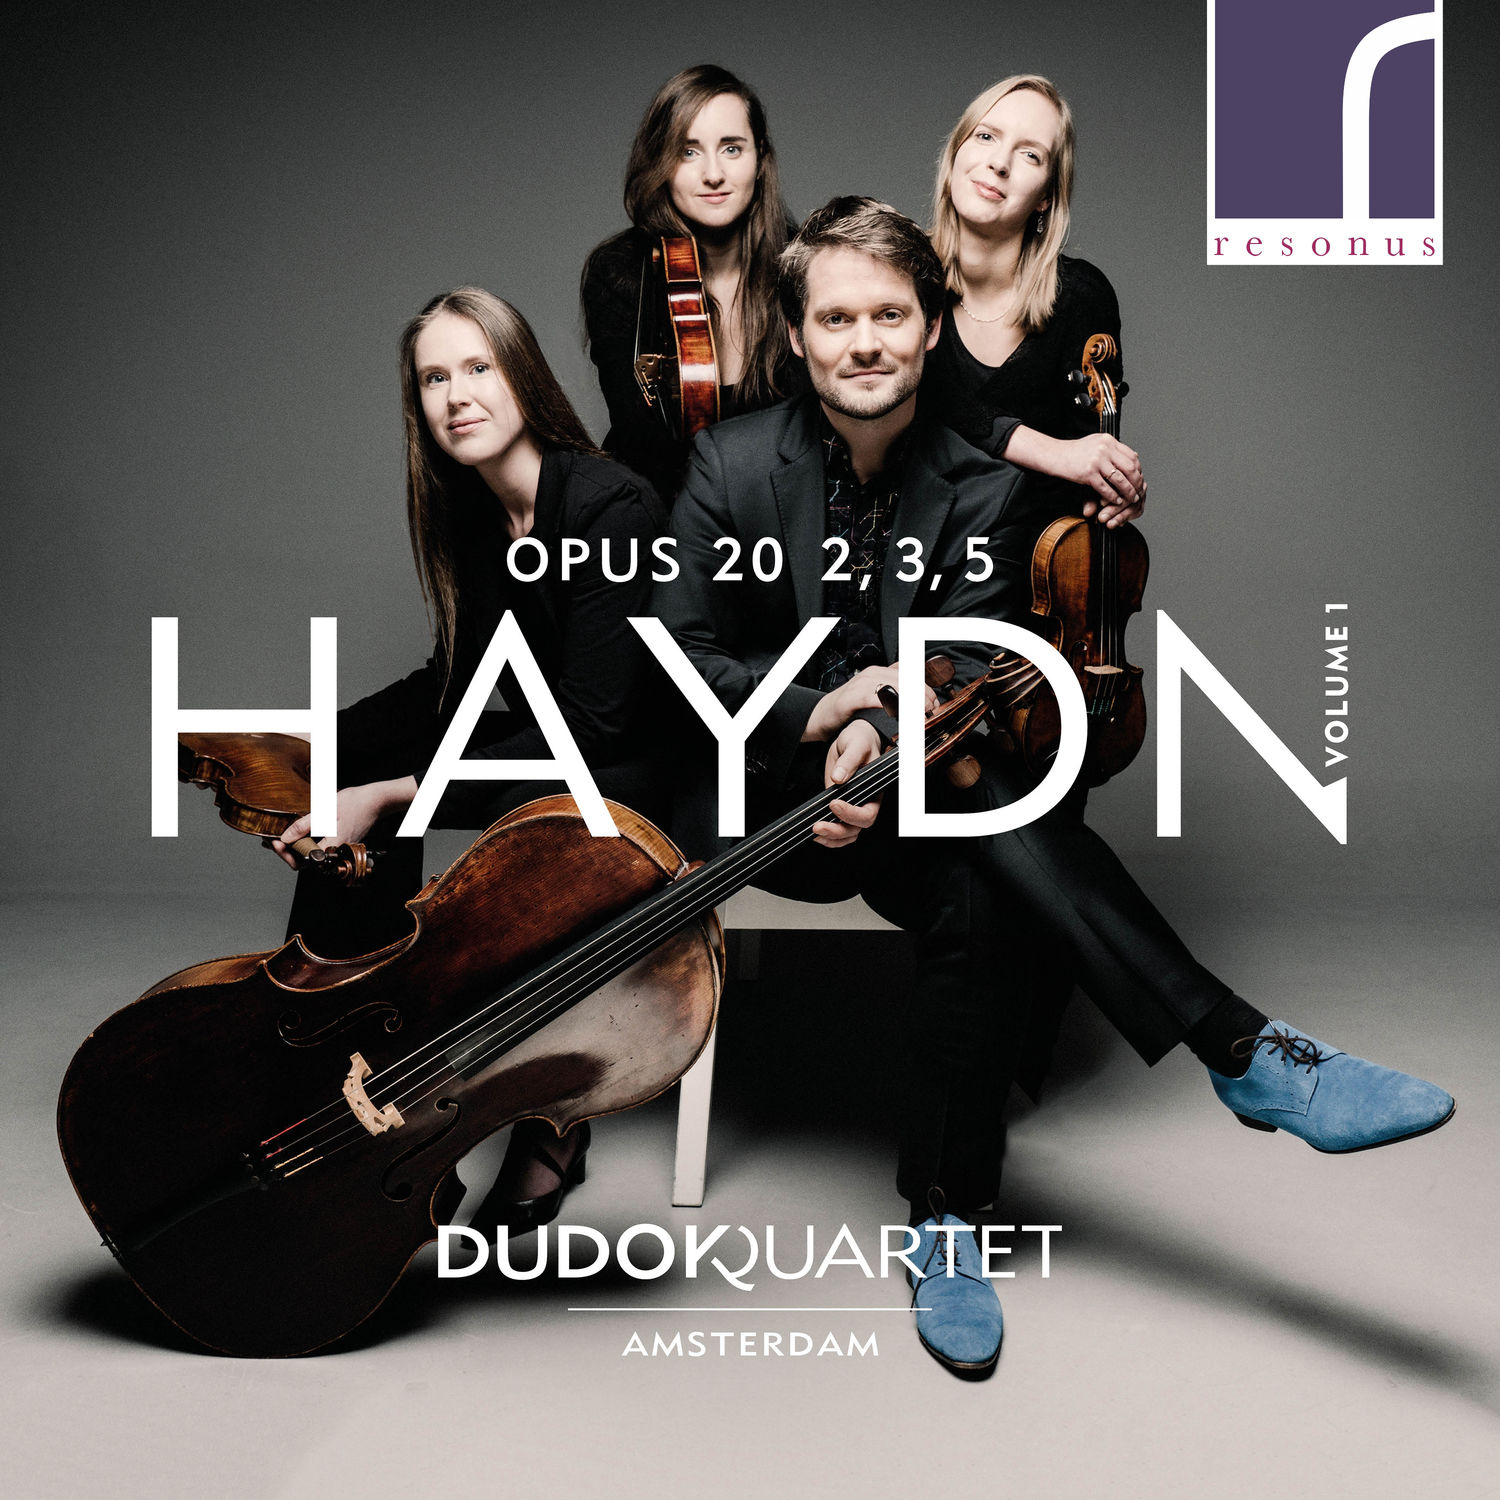 Dudok Quartet Amsterdam – Haydn: String Quartets, Op. 20, Volume 1, Nos. 2, 3 & 5 (2019) [FLAC 24bit/96kHz]